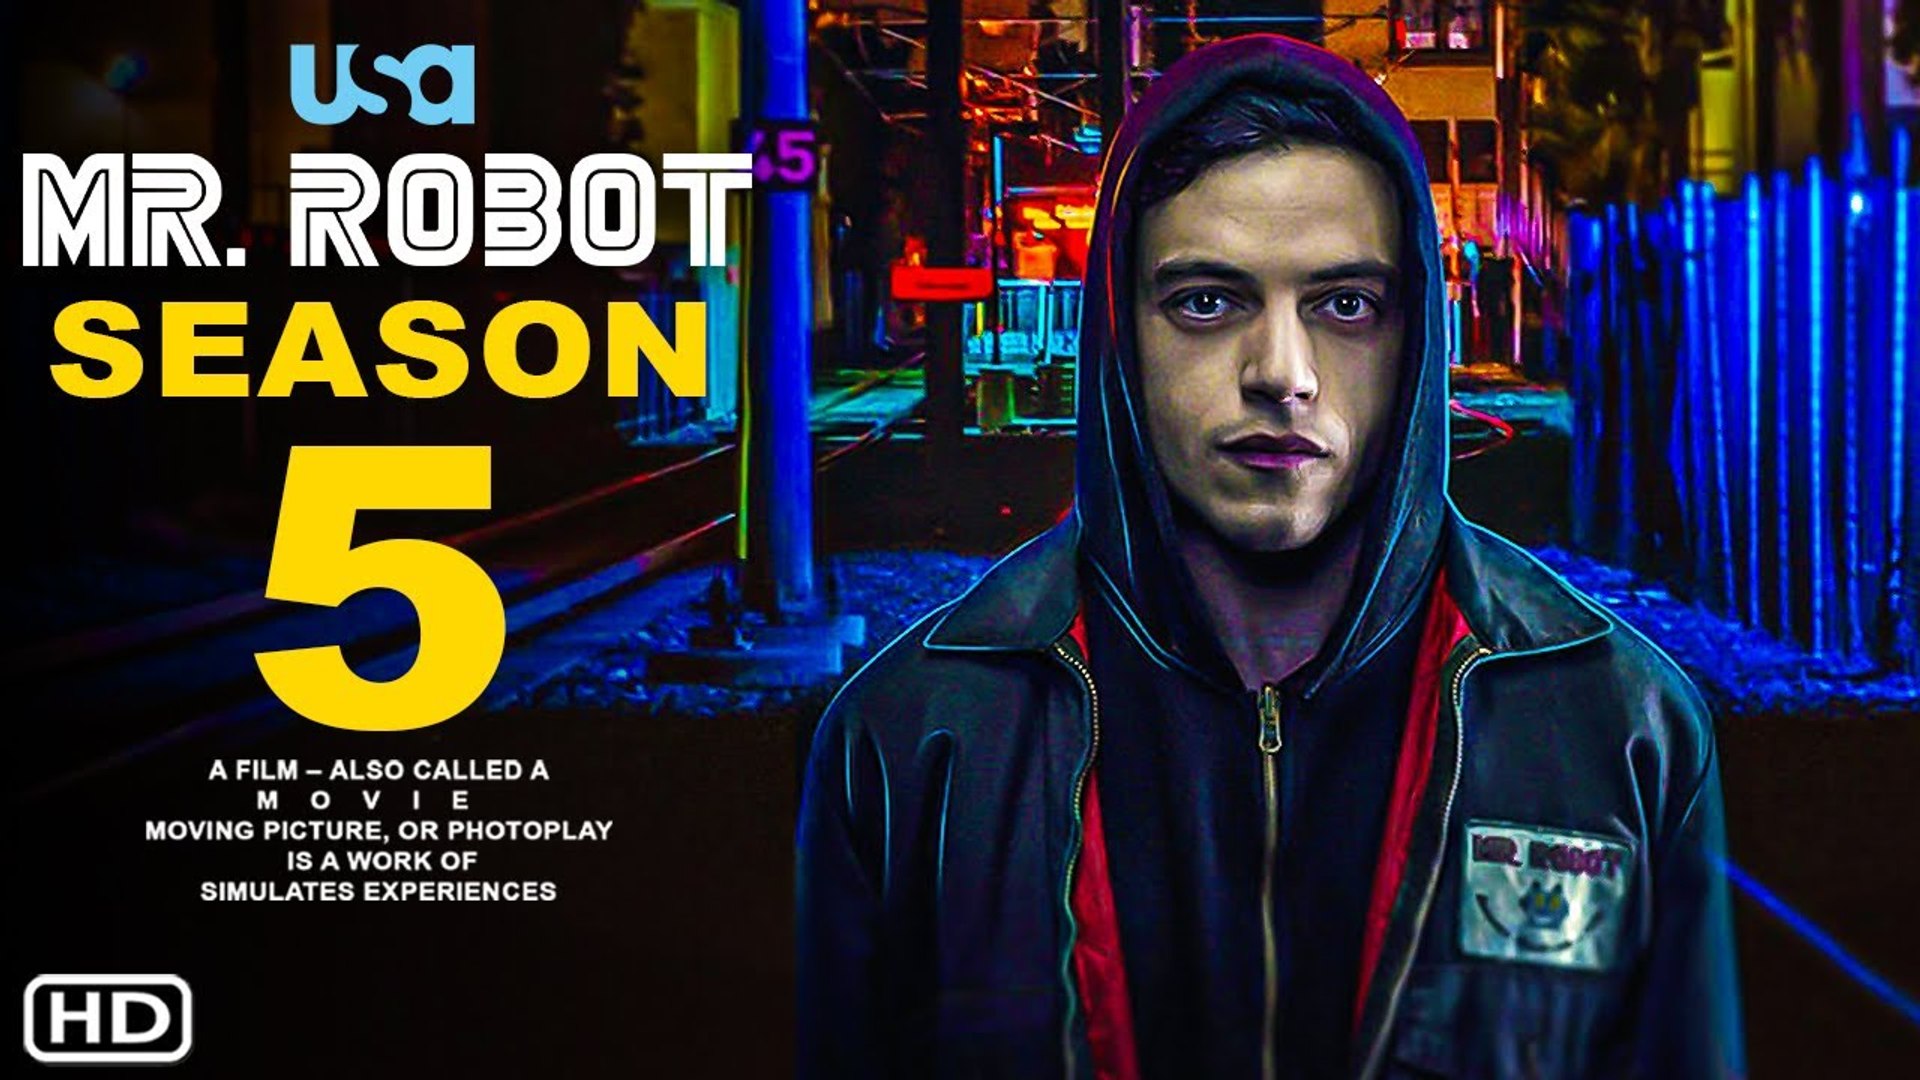 Mr. Robot Season 5 Trailer (USA Network) - Rami Malek & Carly Chaikin -  video Dailymotion